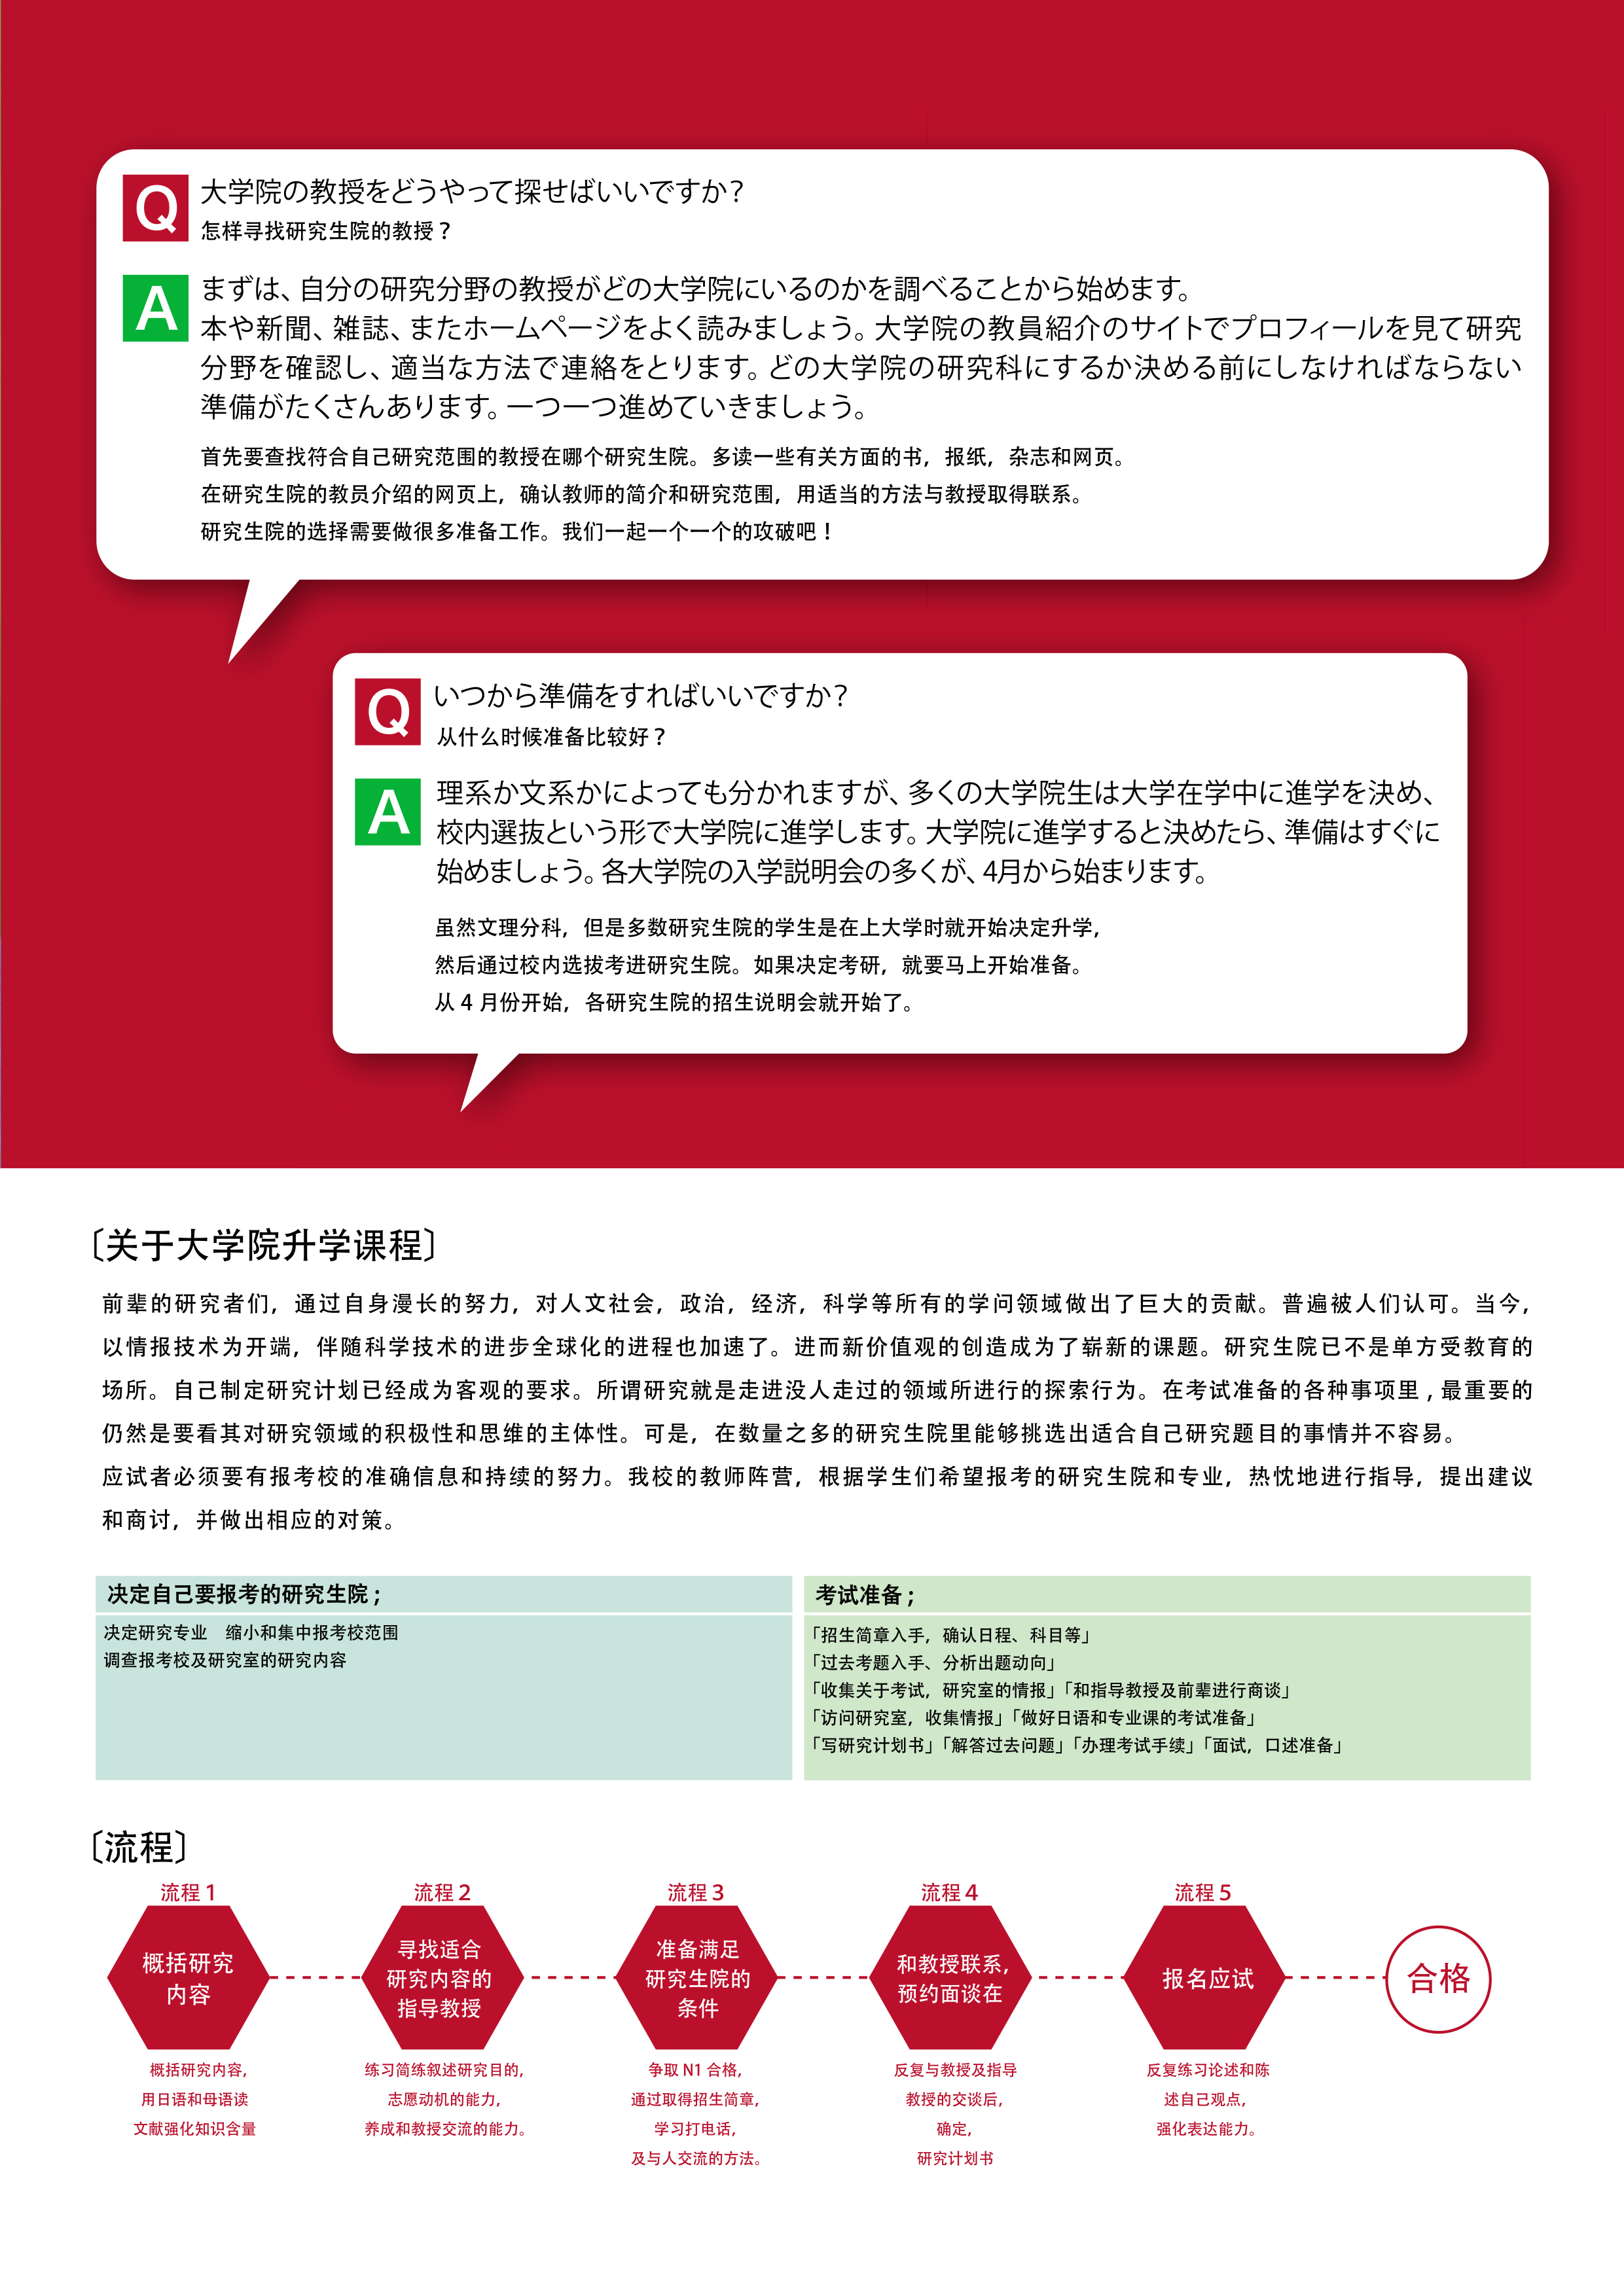 China_パンフレット(1)-4_02.jpg